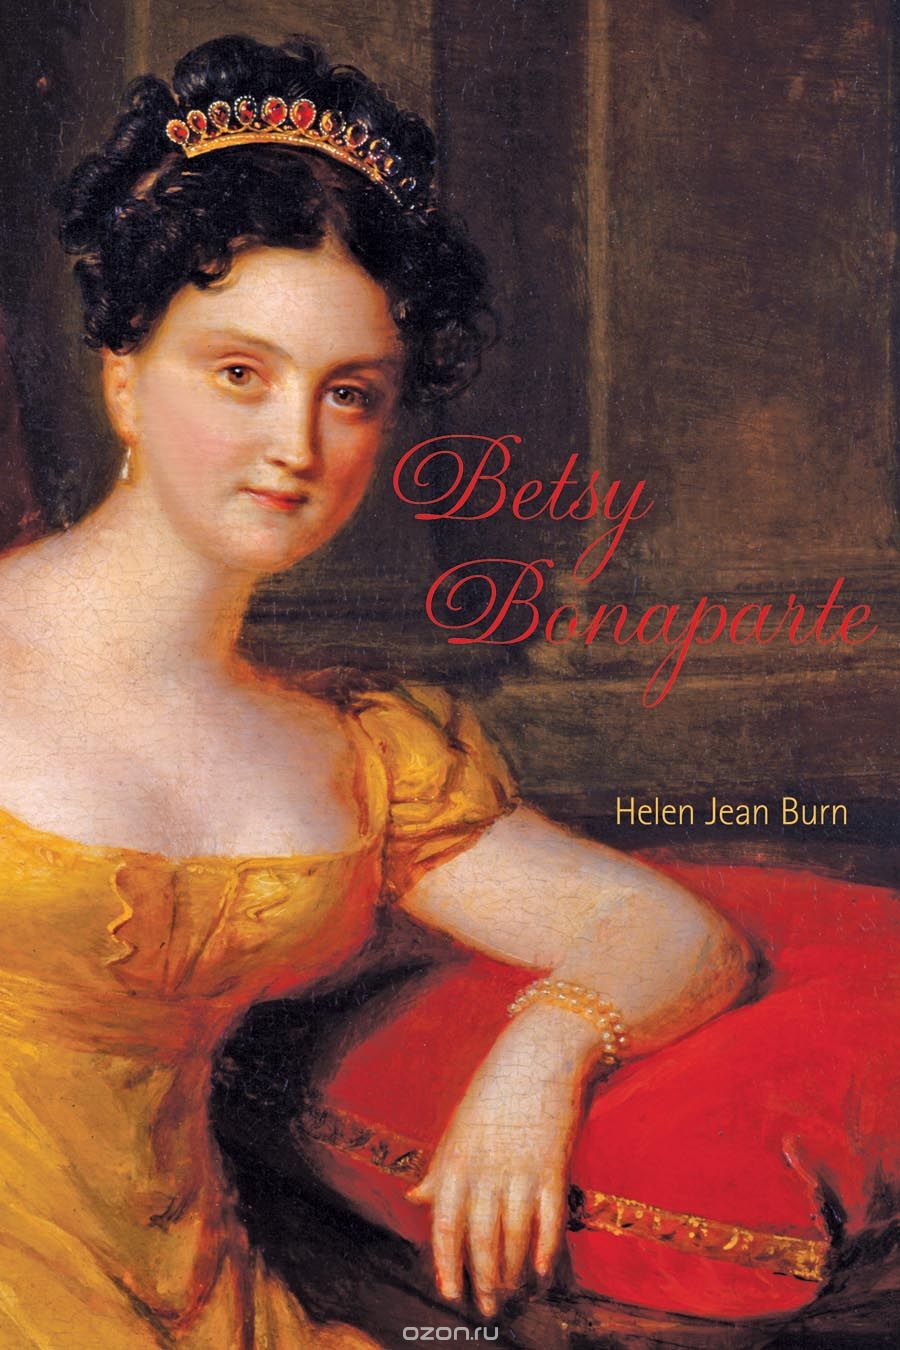 Скачать книгу "Betsy Bonaparte – The Belle of Baltimore"